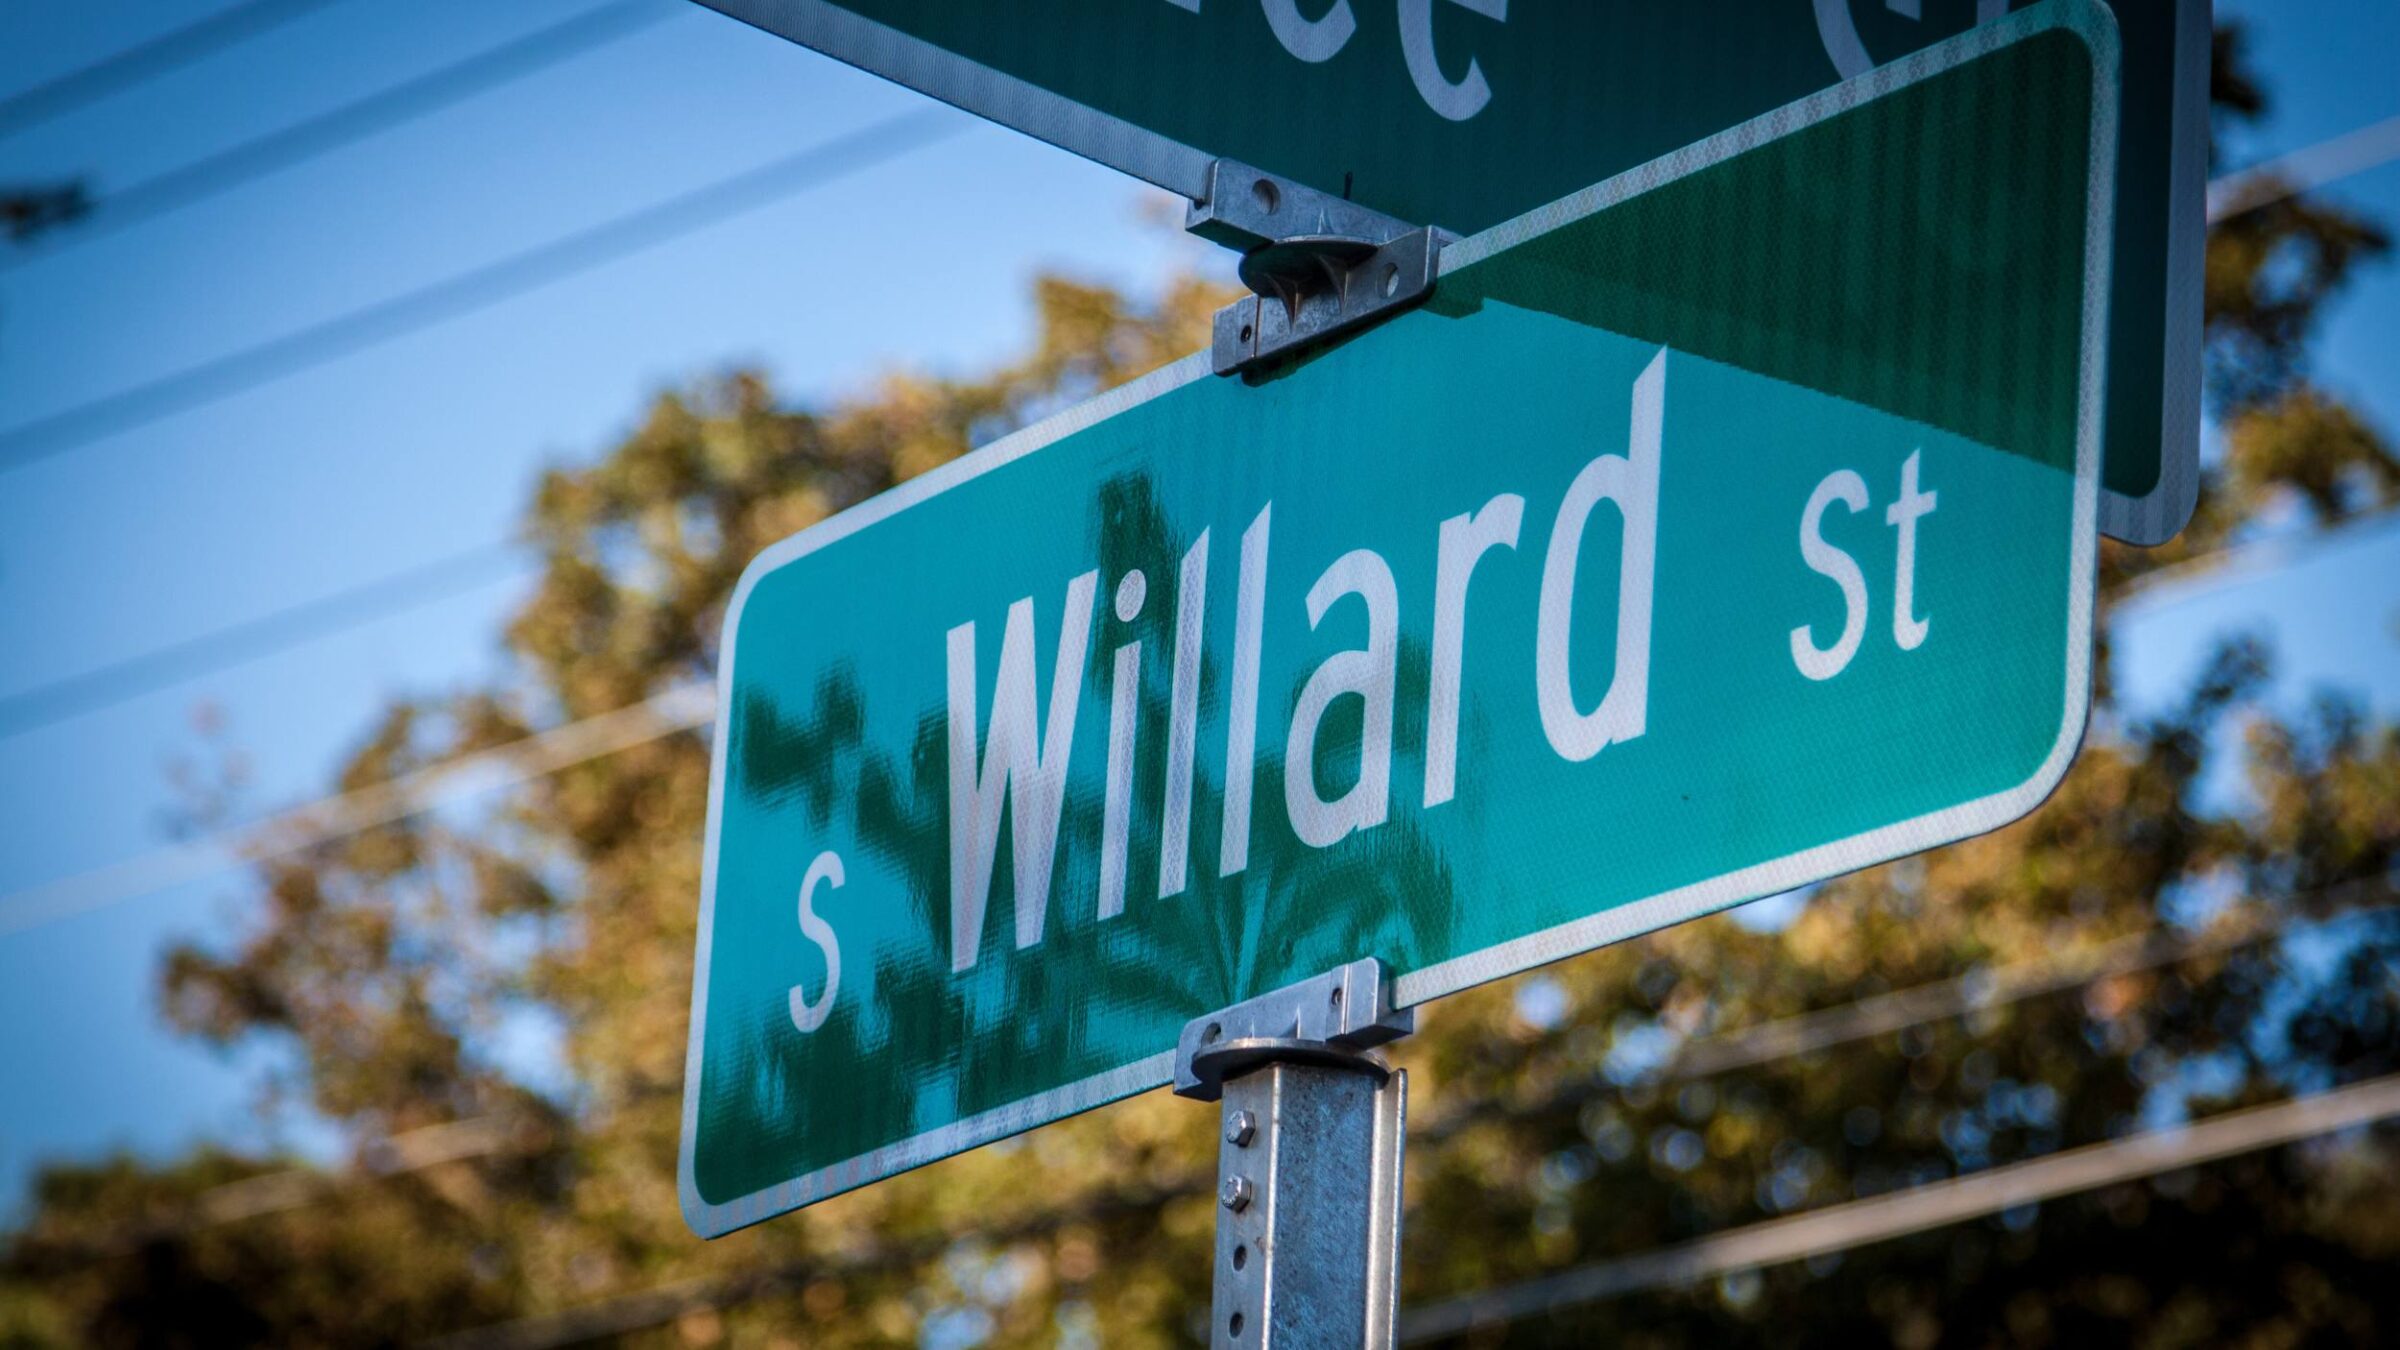 A sunny photo of the south willard street sign in Burlington